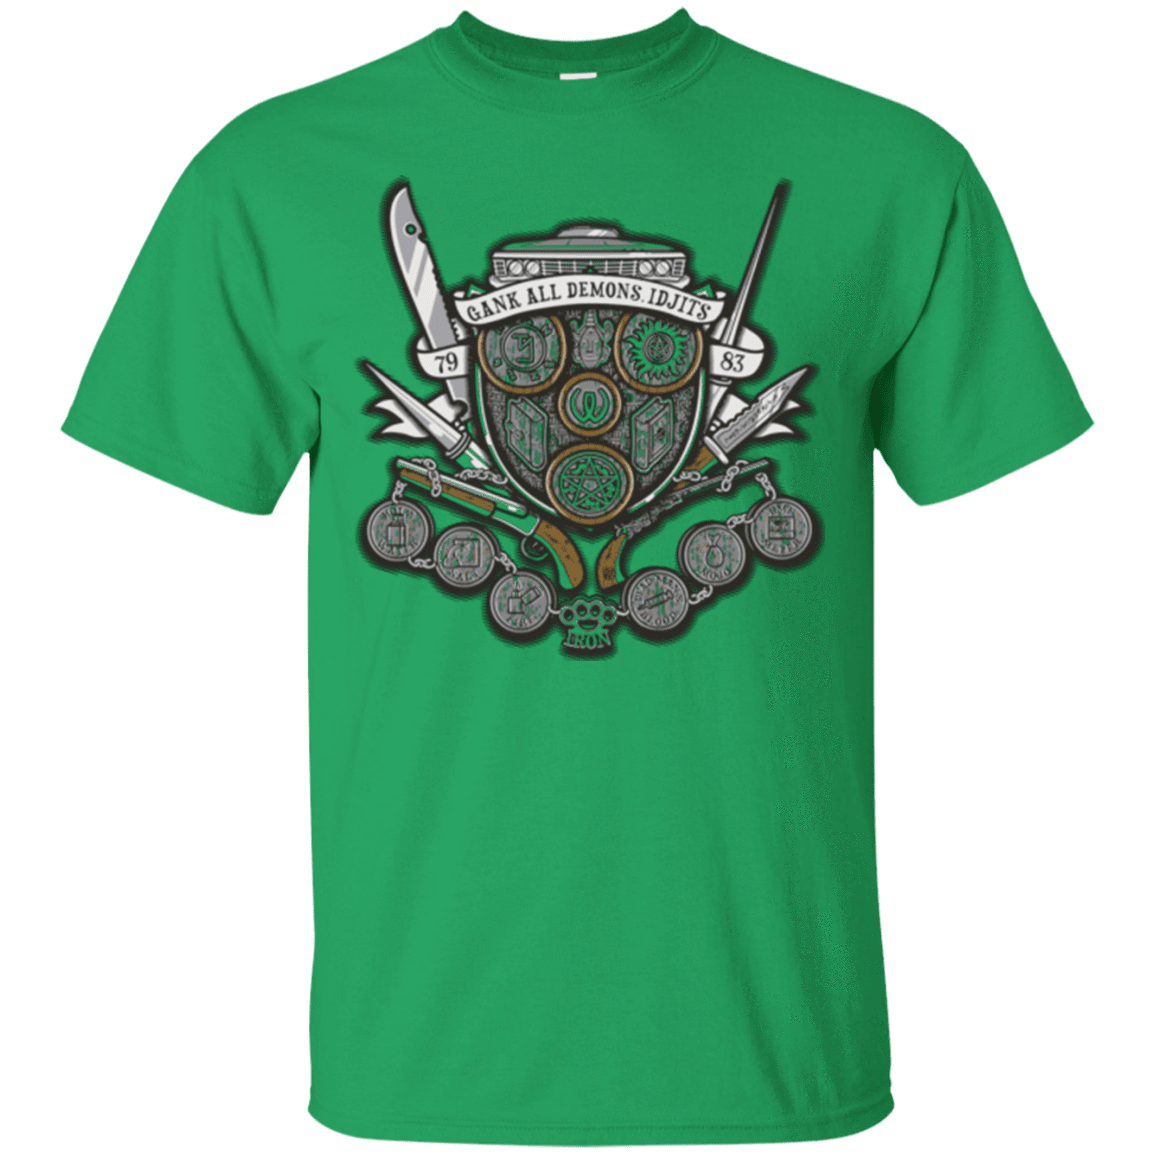 T-Shirts Irish Green / Small Winchester's Crest T-Shirt